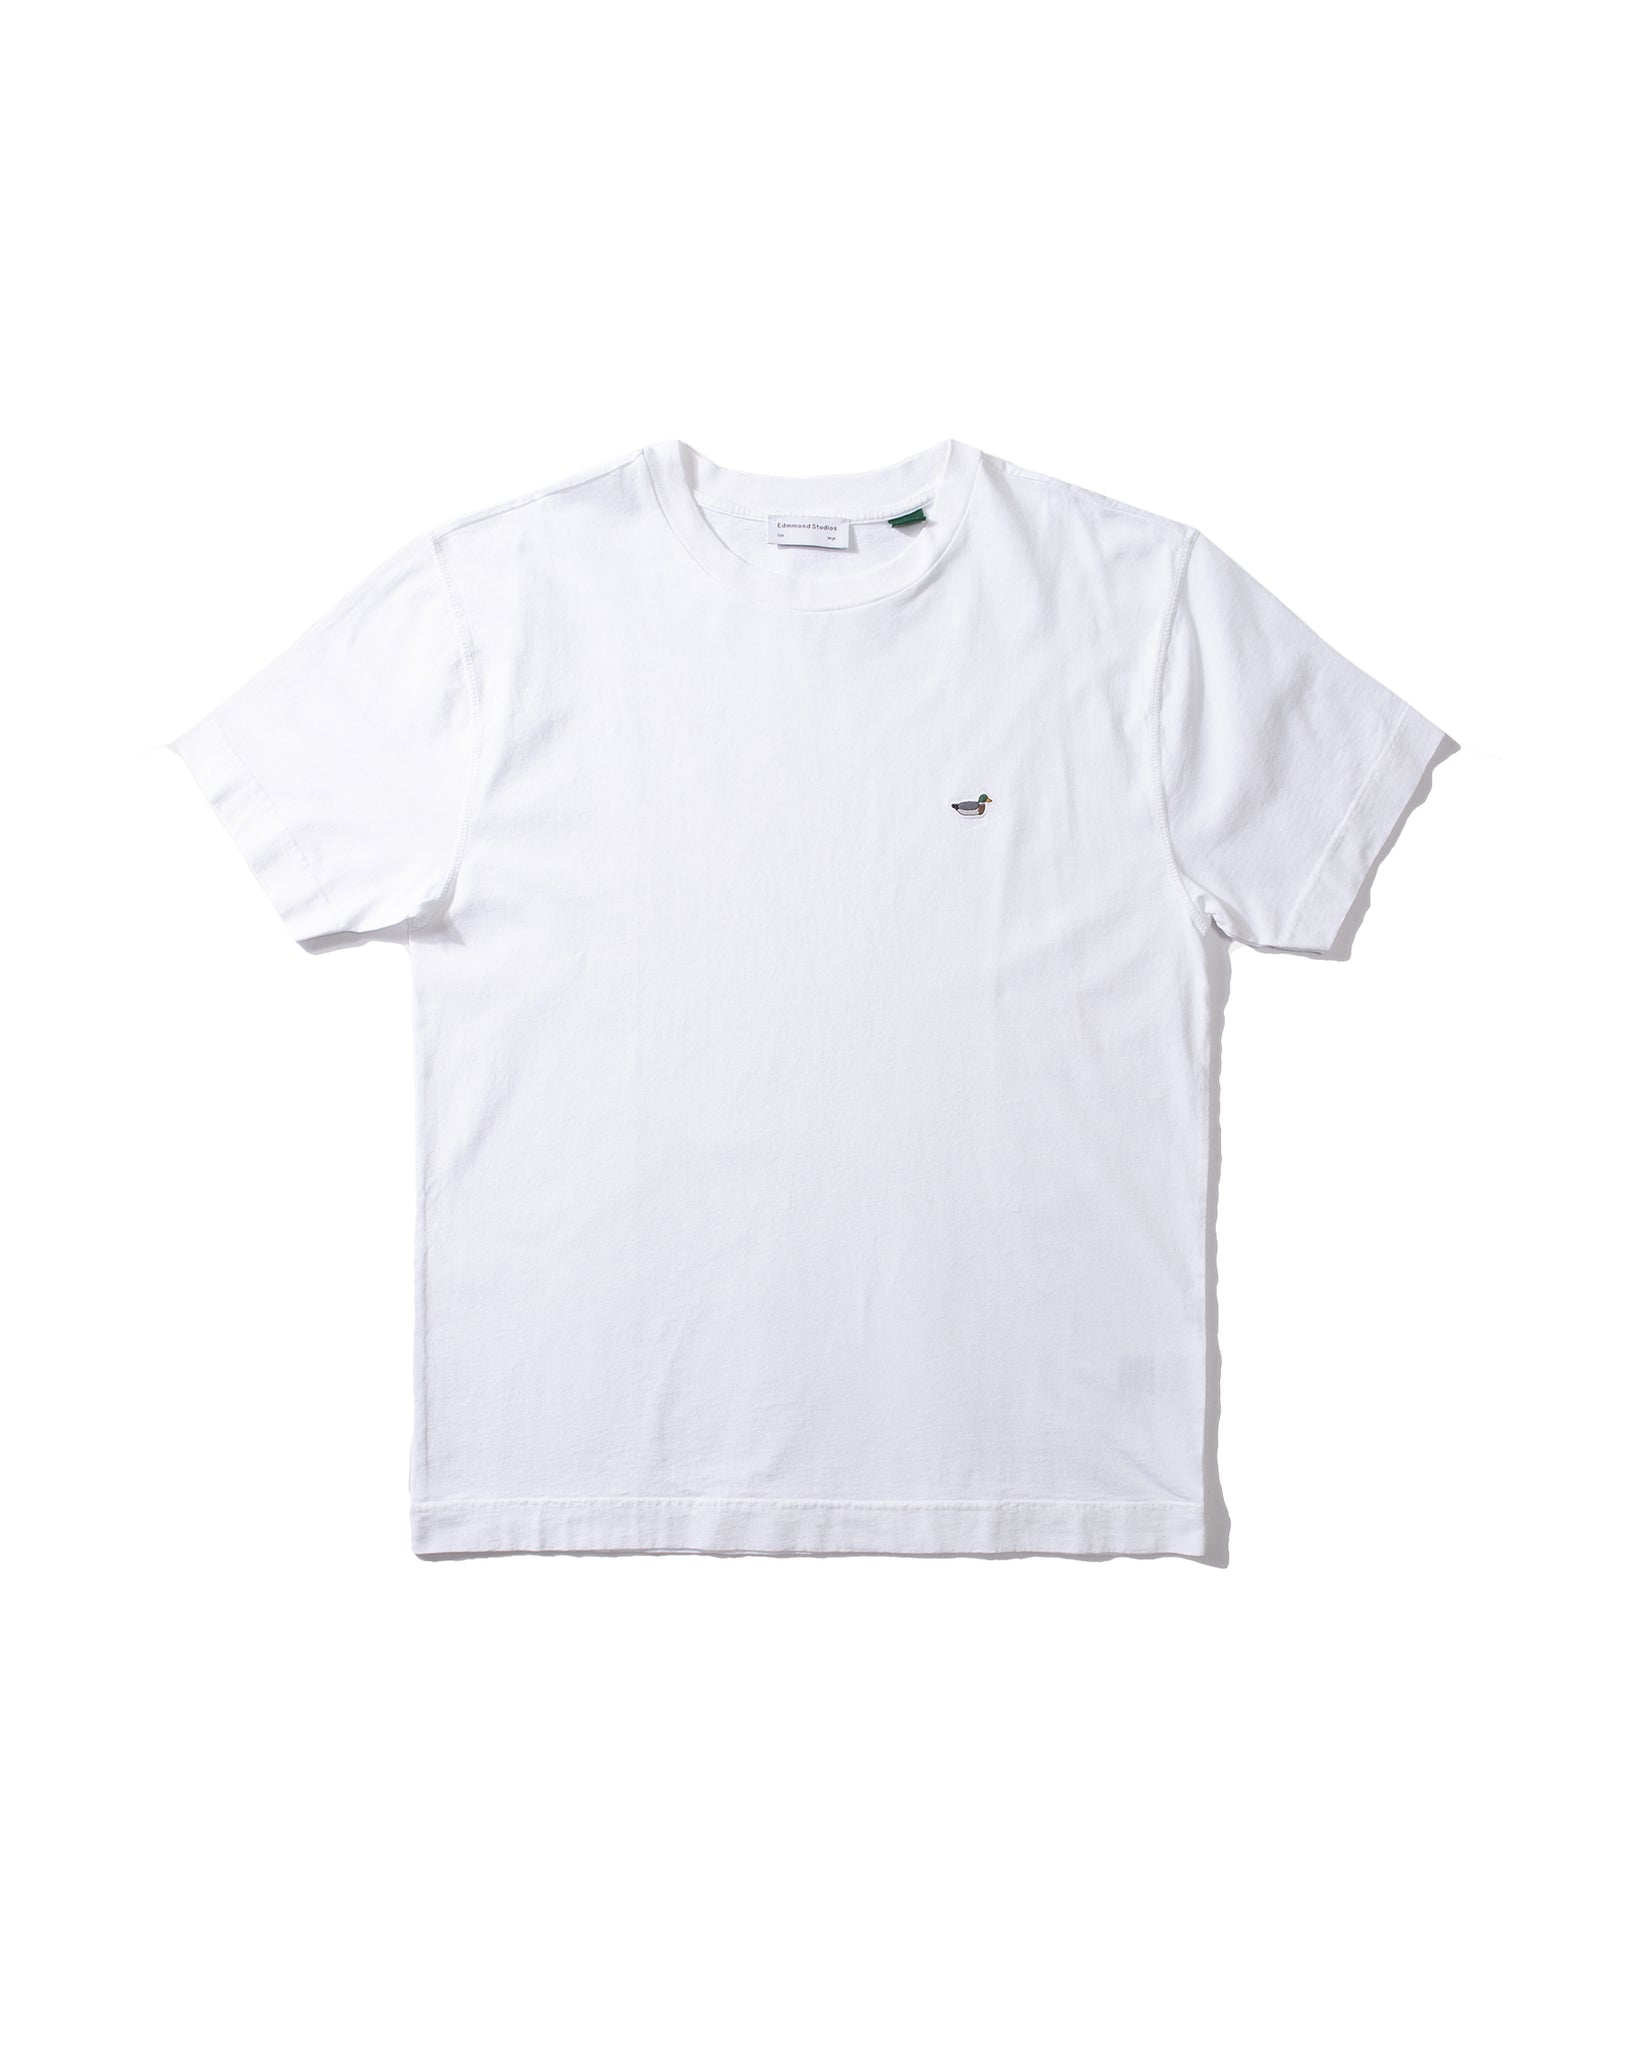 Camiseta Duck Patch - Plain White